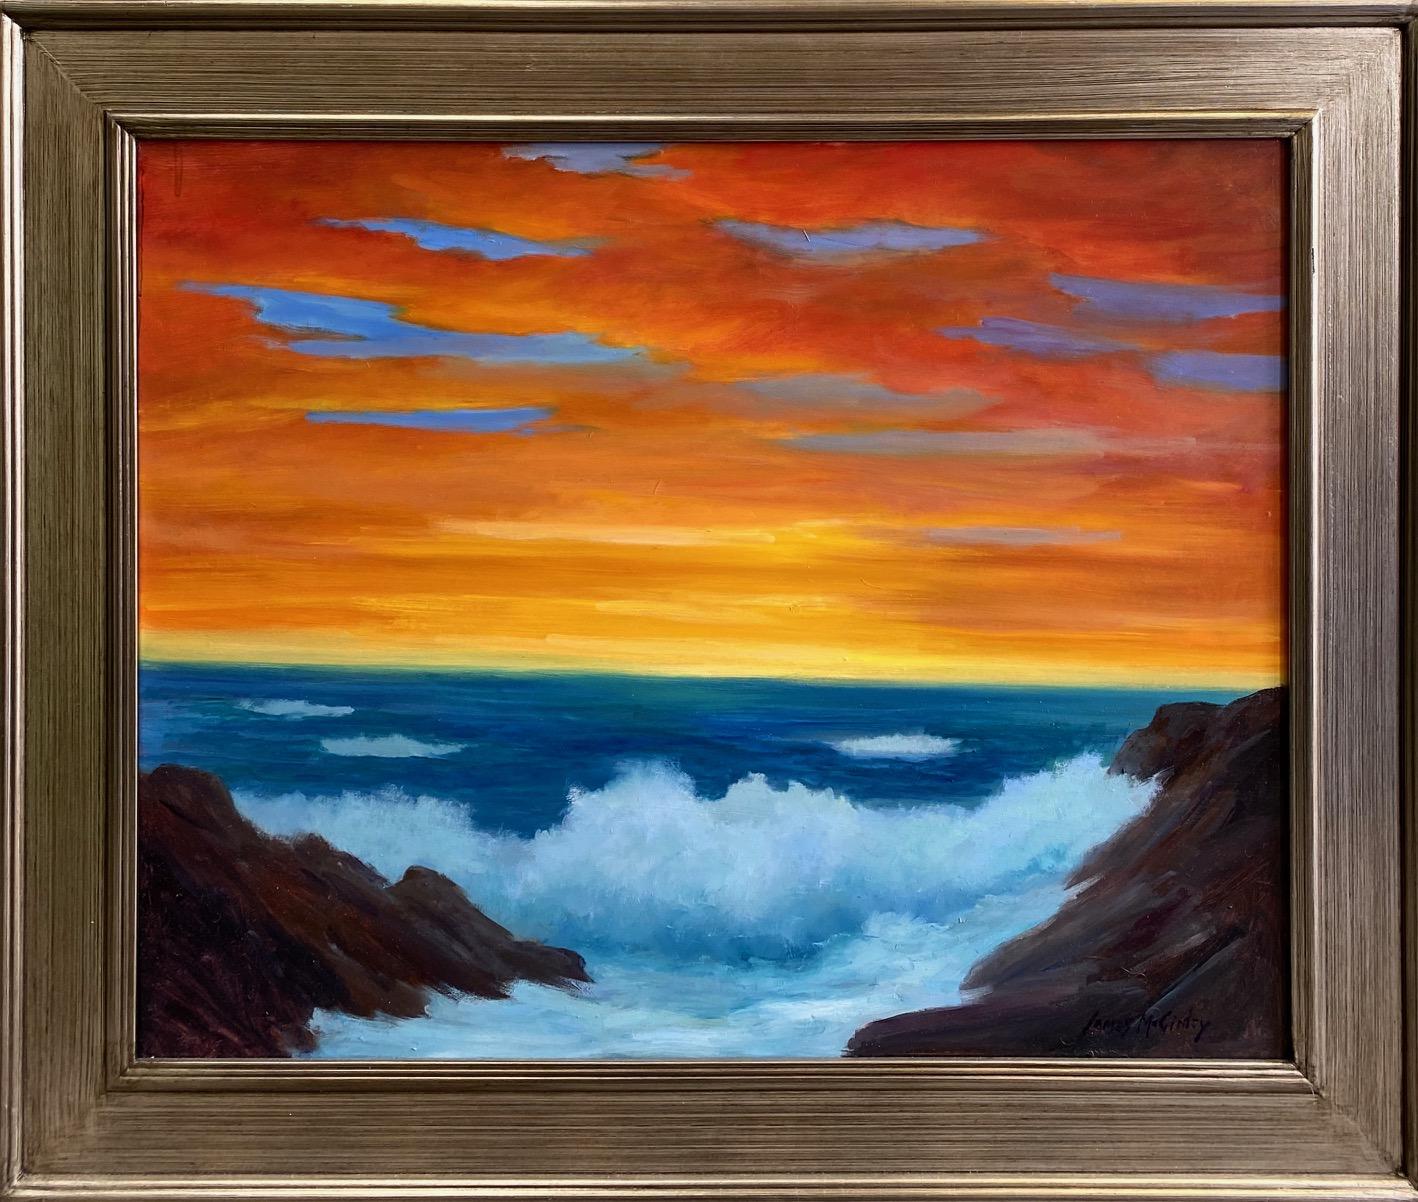 James McGinley Landscape Painting - Sunrise on the Atlantic, original 24x30 impressionist marine landscape